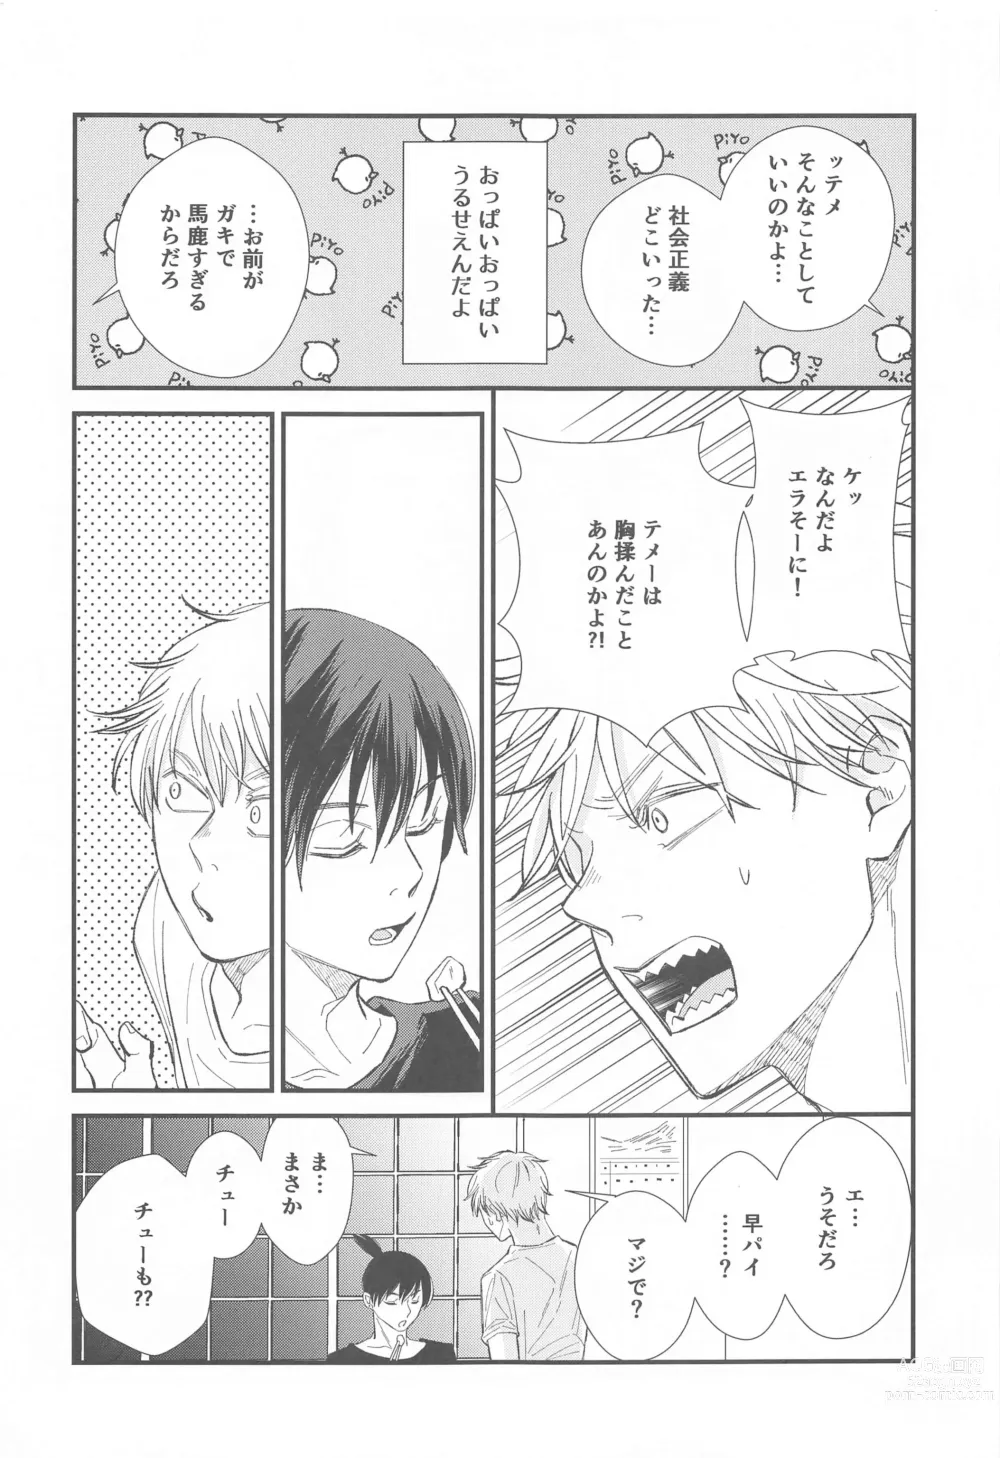 Page 6 of doujinshi FOOL